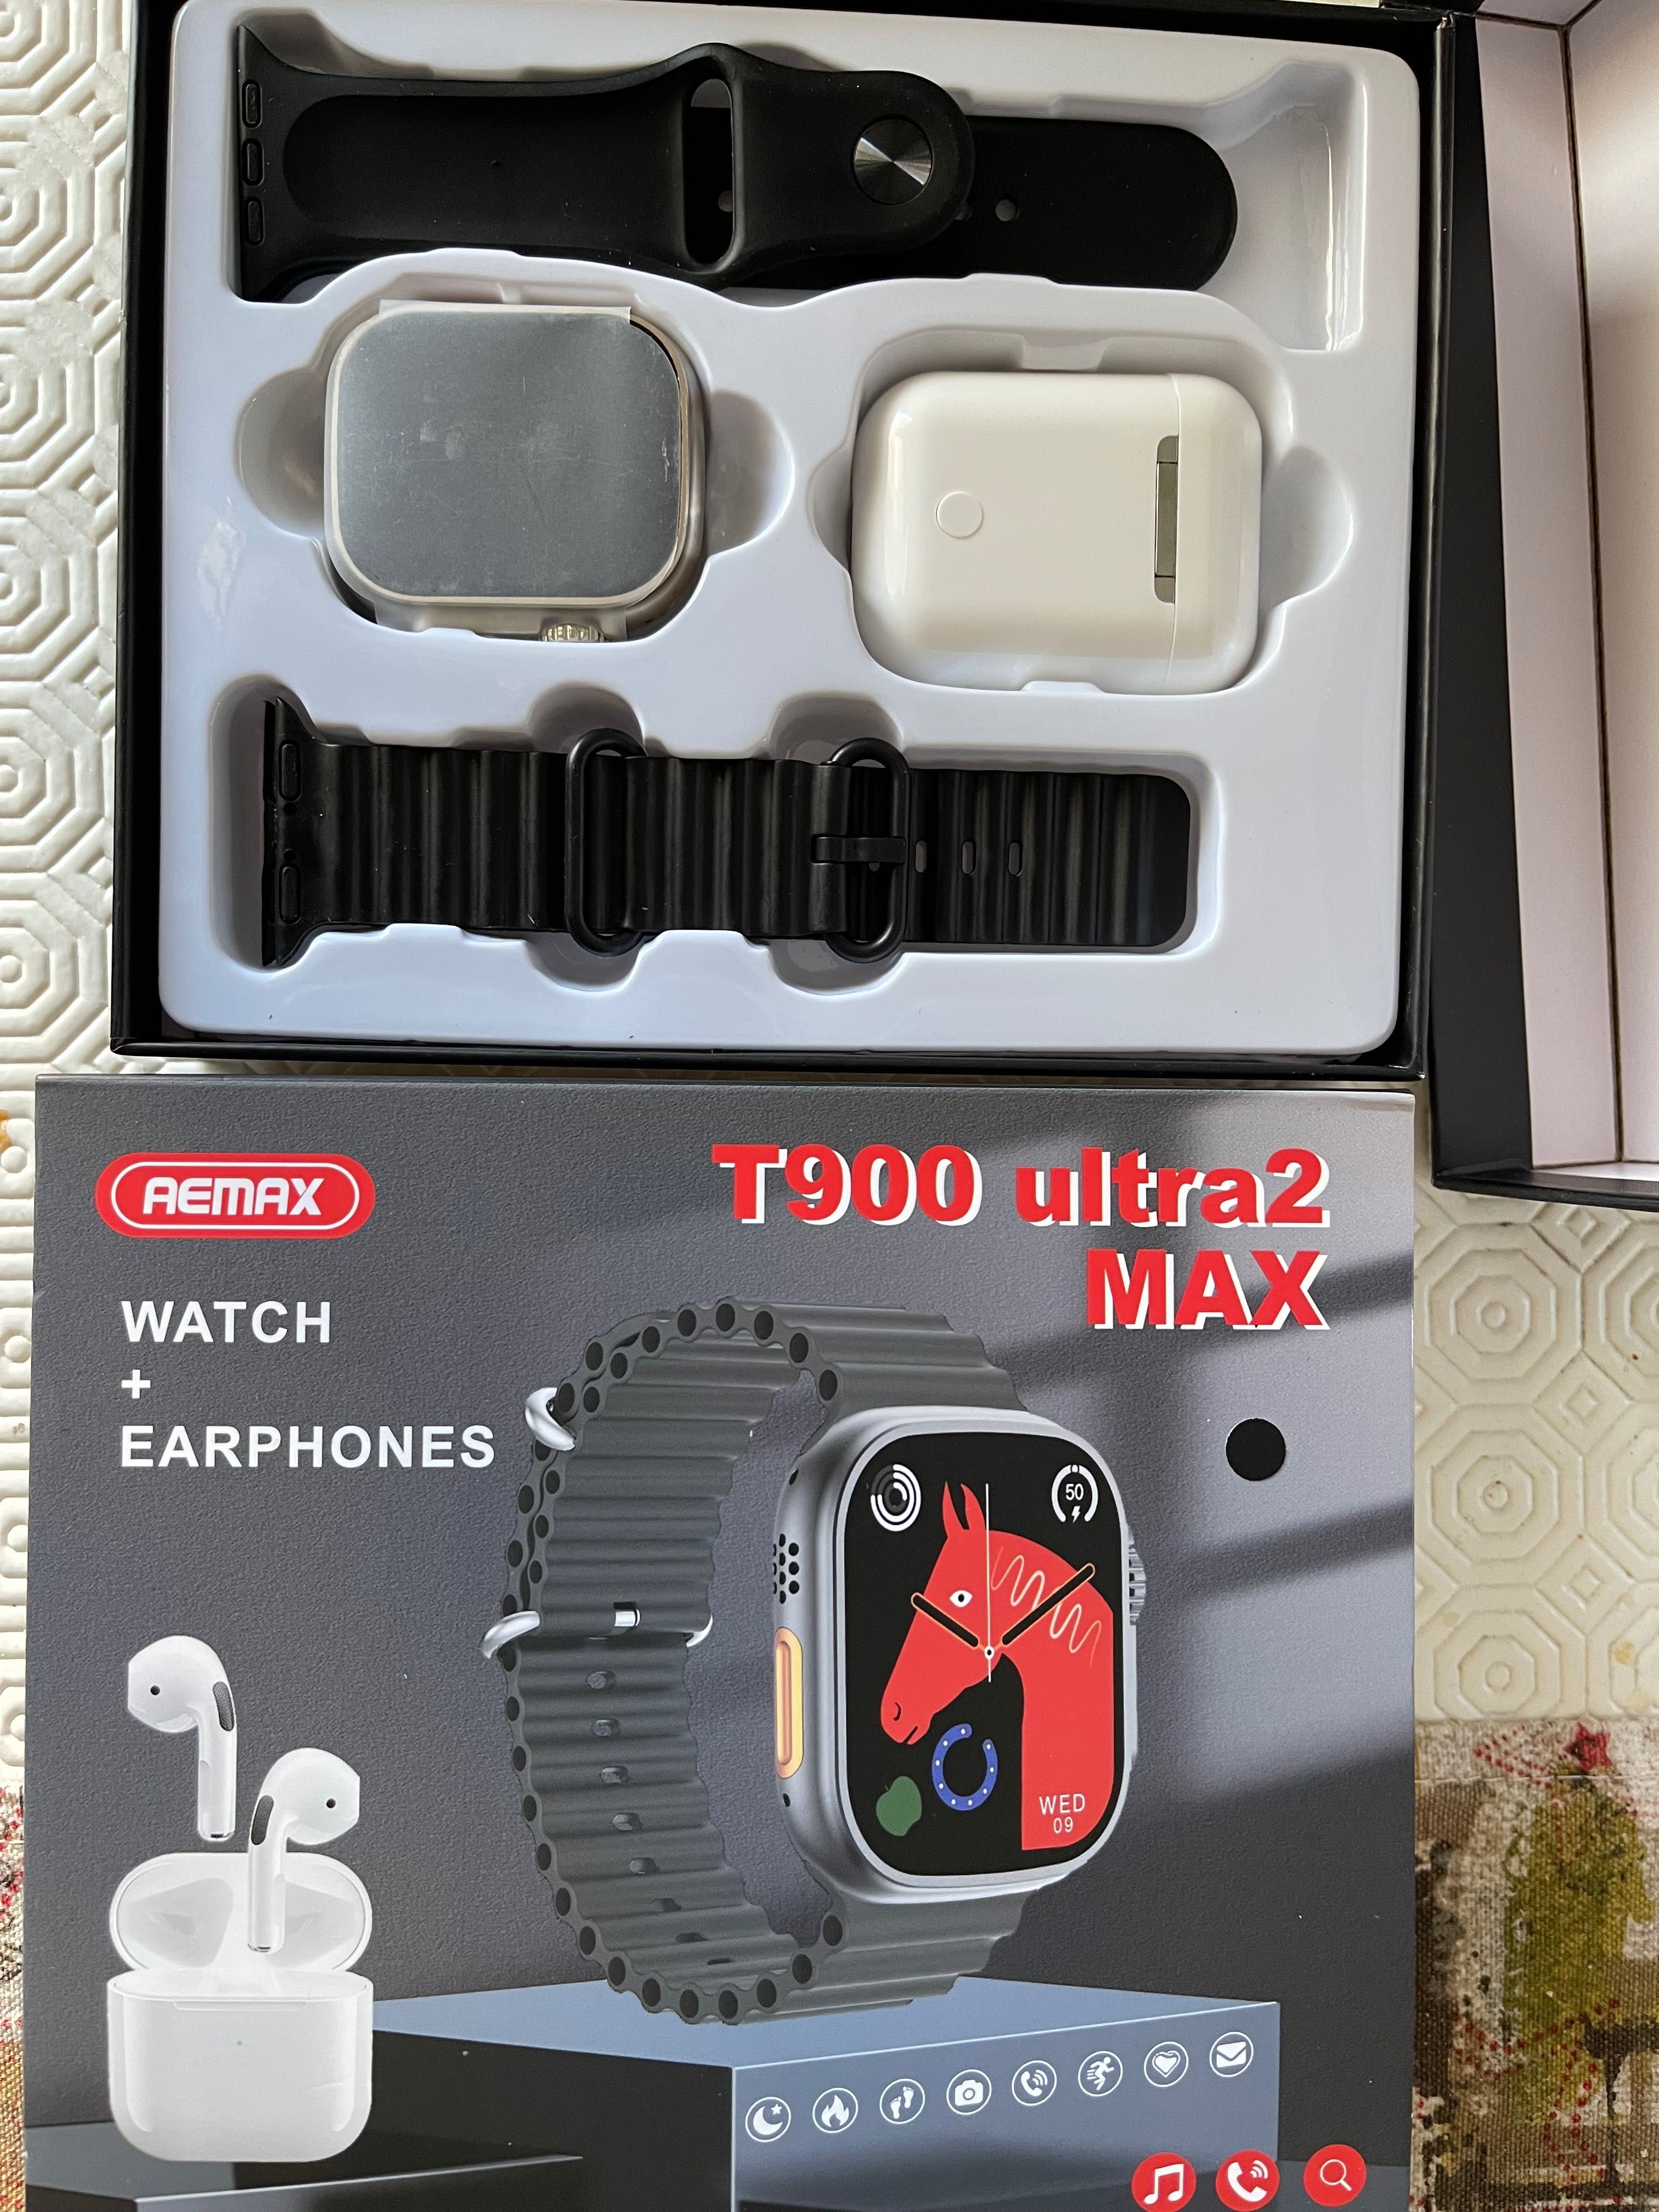 Smartwatch T900 ultra 2 max
Com oferta Auscultadores